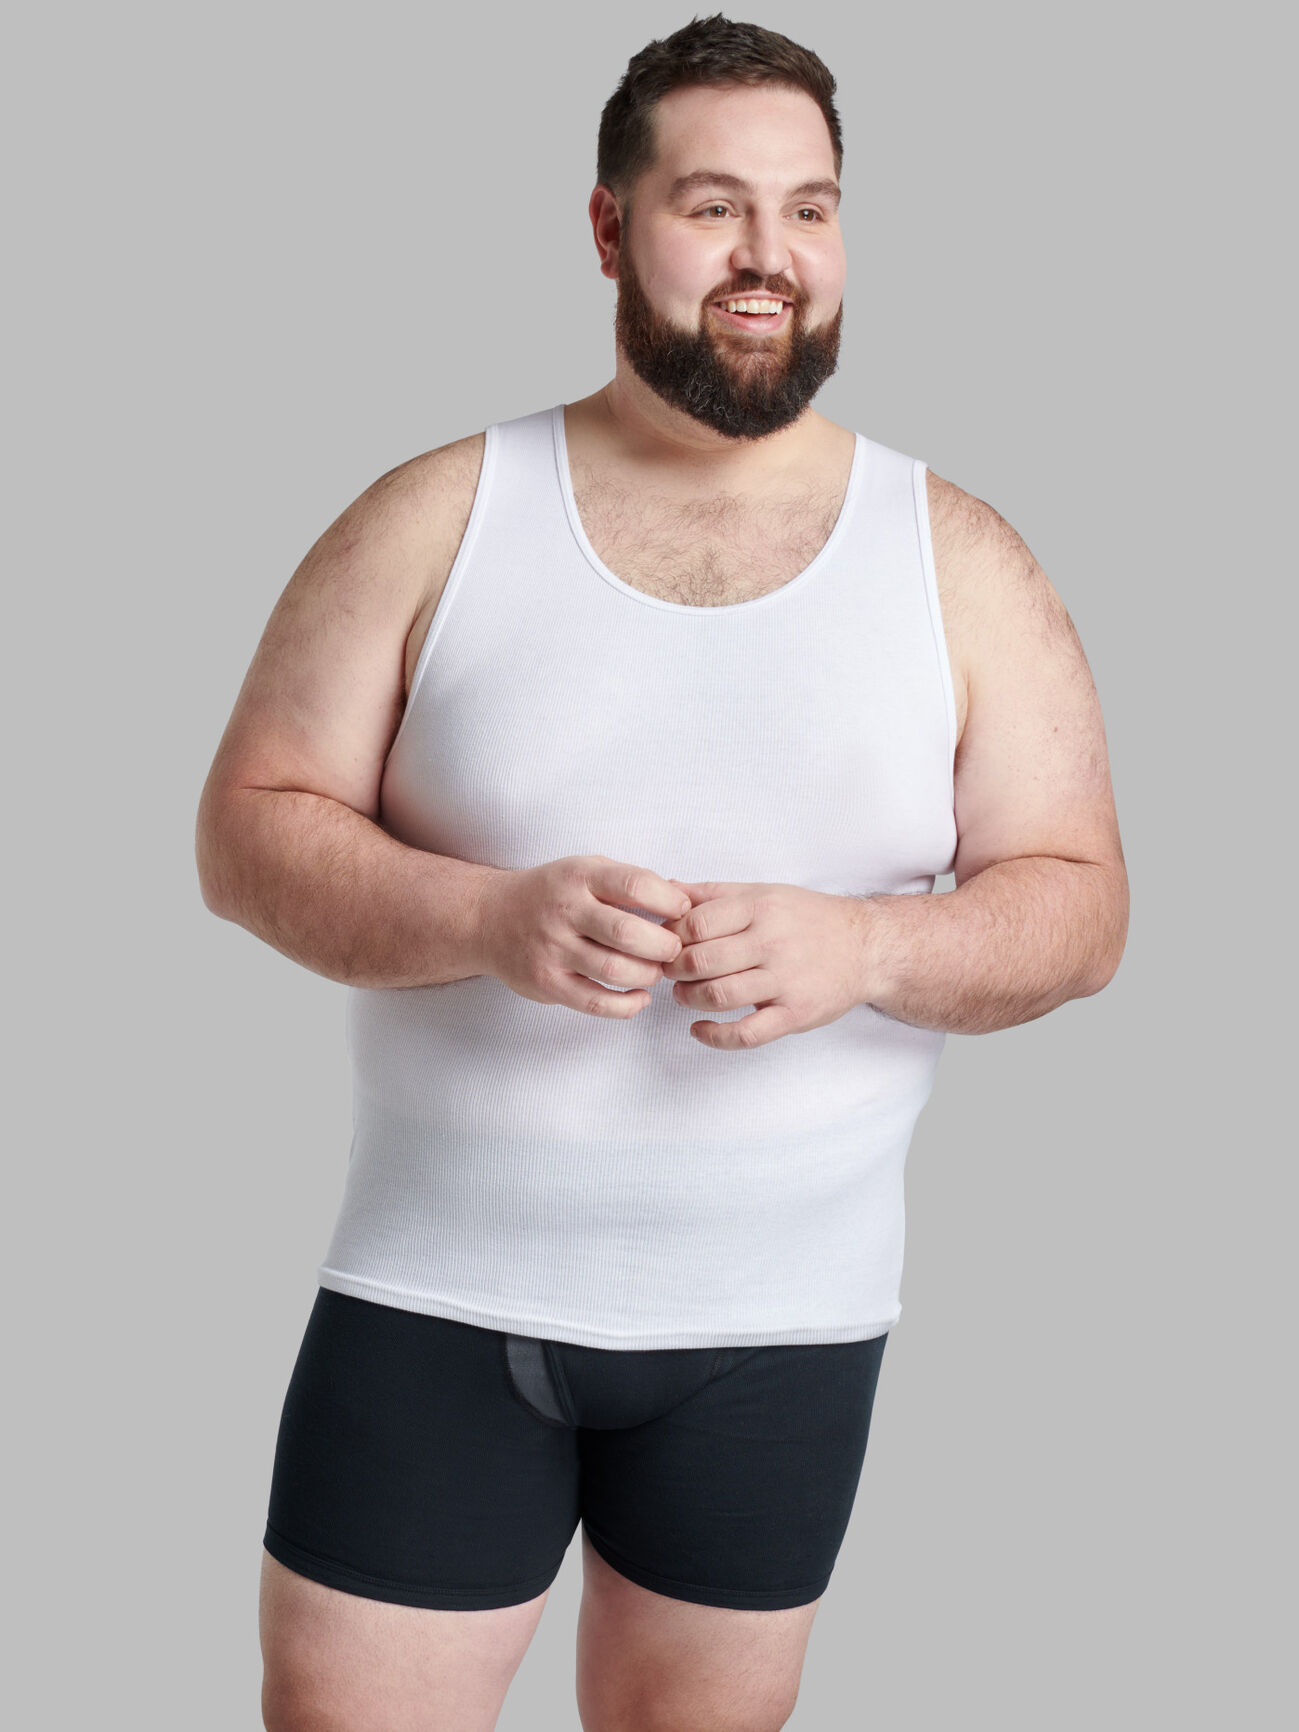 Men's Wide Shoulder Cut Open Gym Training Vest Sleeveless Cotton T-Shirt  Workout Undershirt Tee Muscle Top